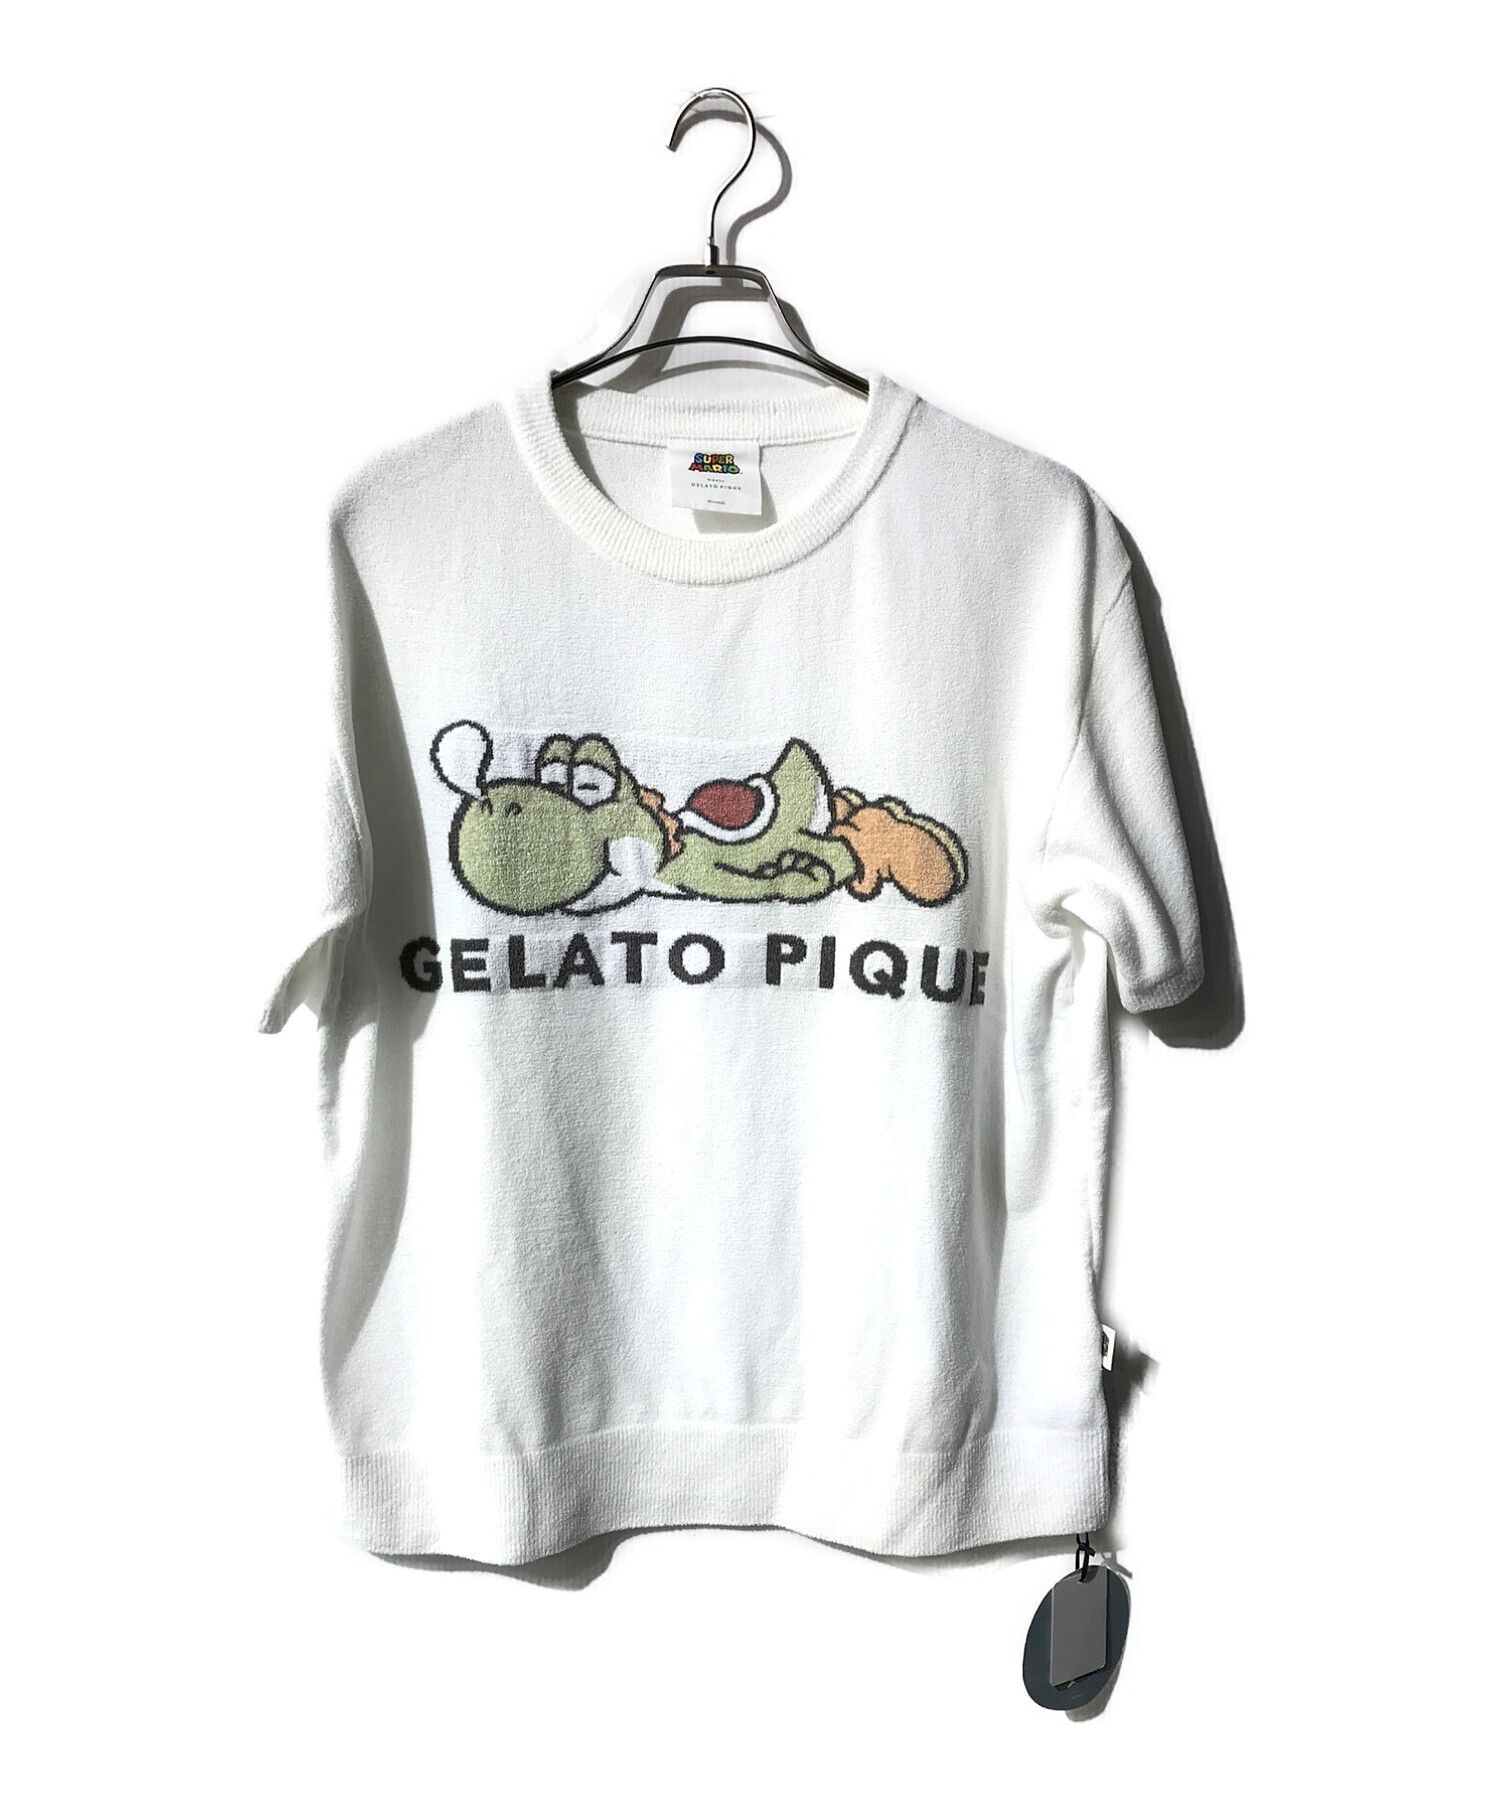 gelato pique (ジェラート・ピケ) セットアップルームウェア グリーン×ホワイト サイズ:FREE 未使用品